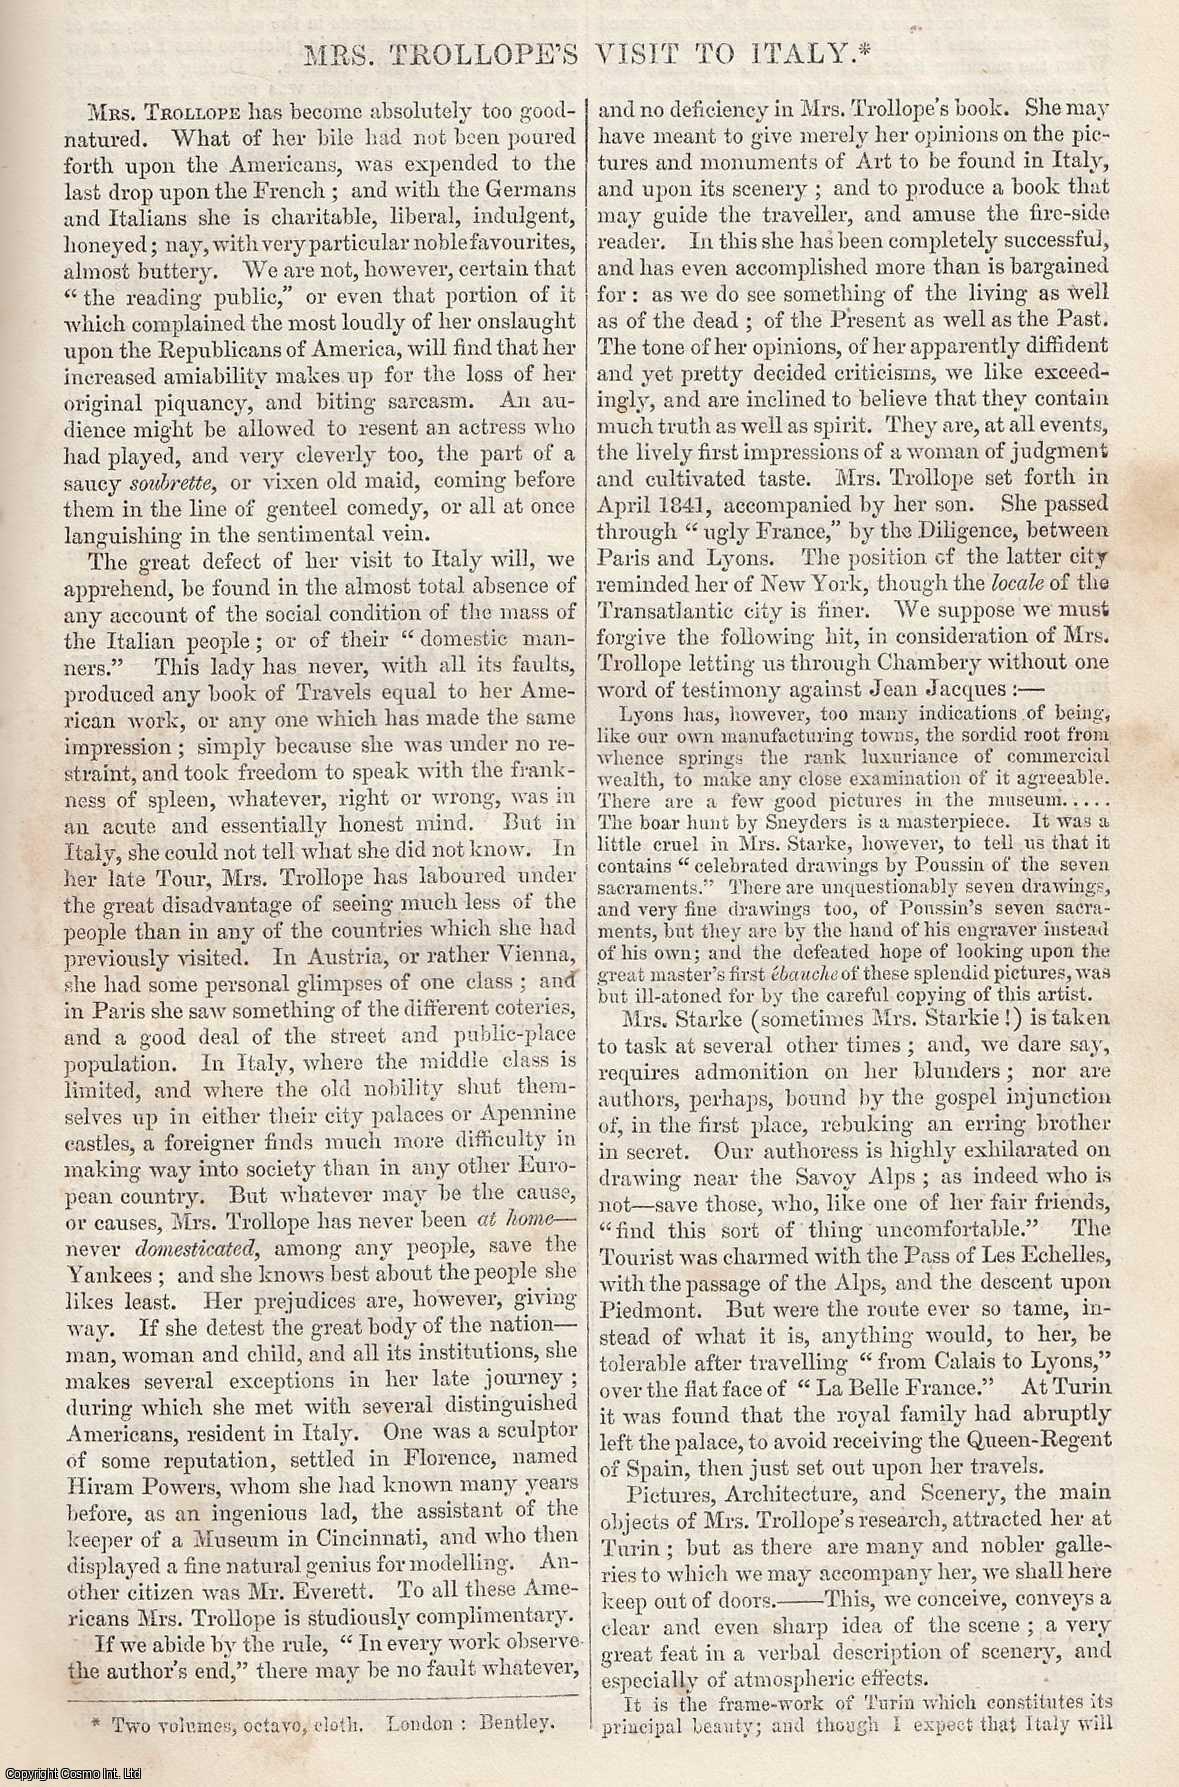 Johnstone, Christian - Mrs. Trollope's Visit to Italy. An original article from Tait's Edinburgh Magazine, 1842.